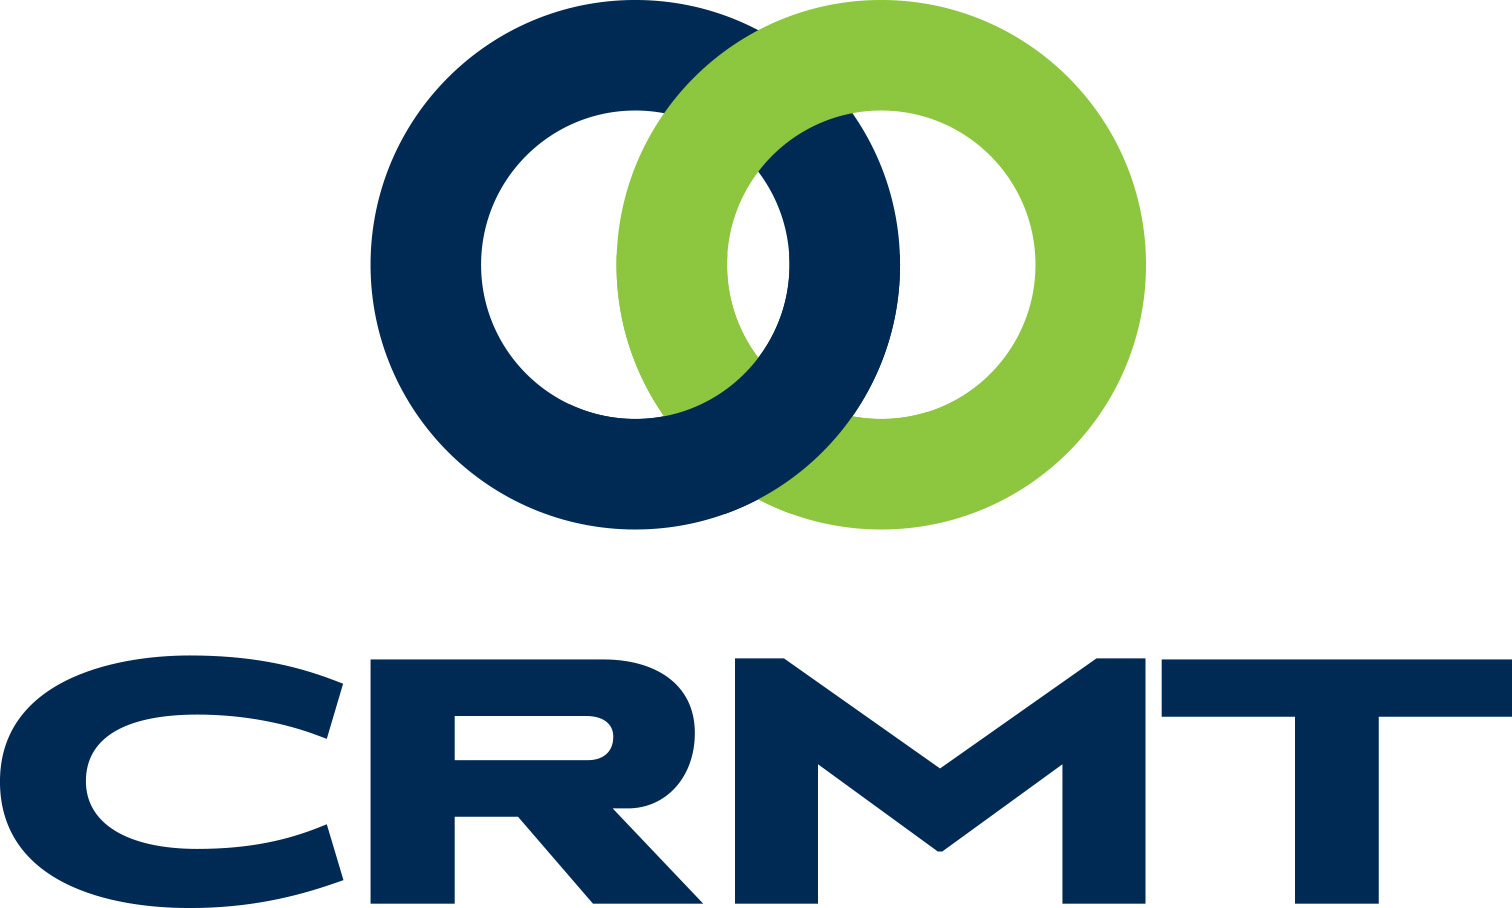 CRMT logo primarni color5